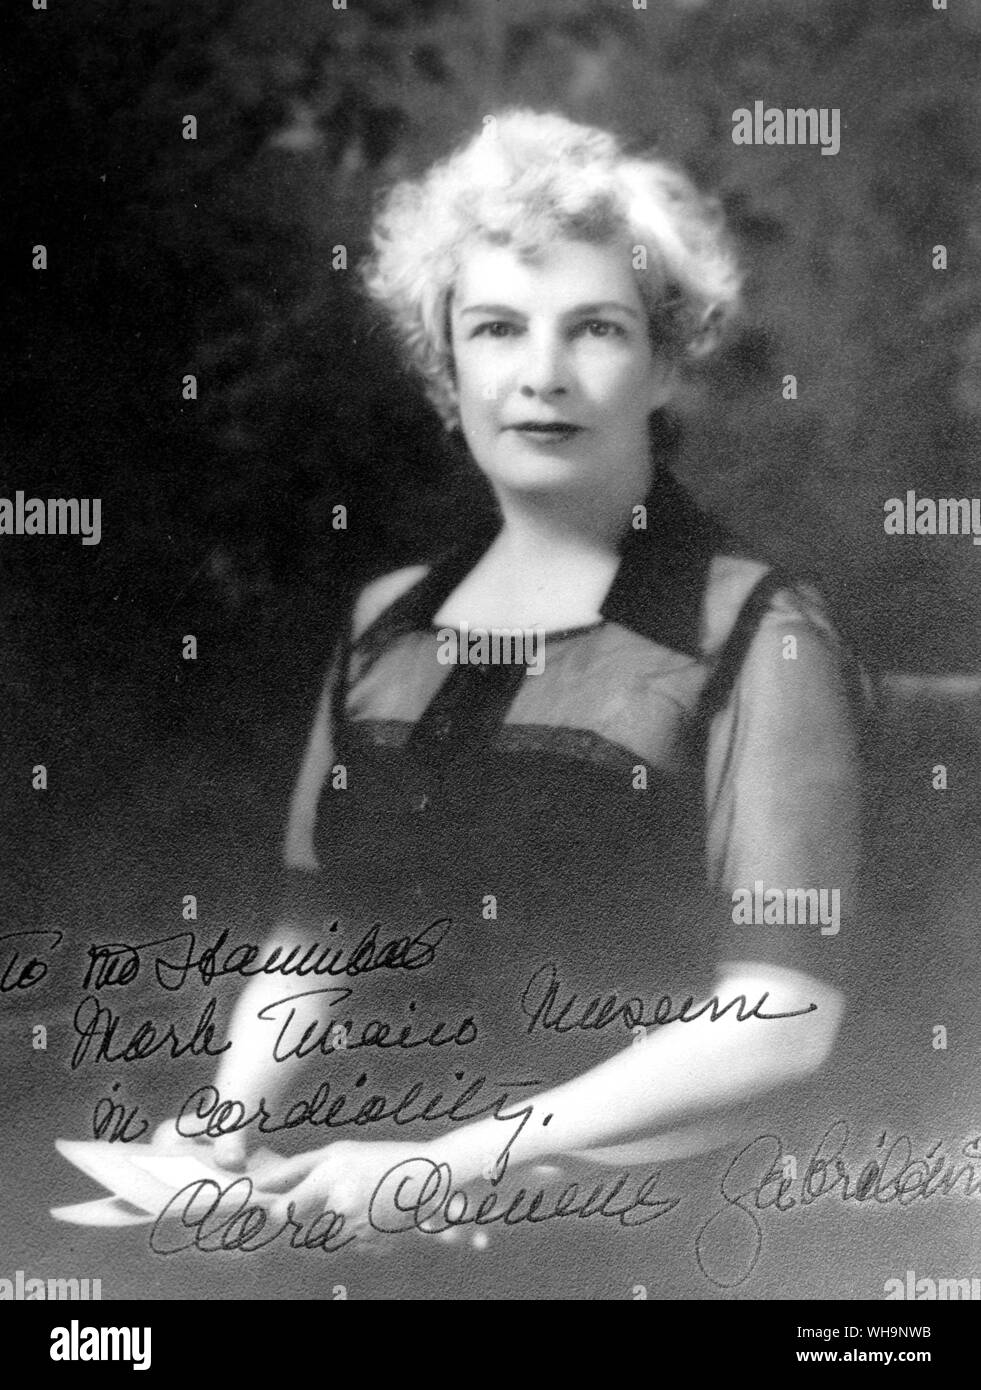 Clara Clemens - photo from Mark Twain's biography Stock Photo